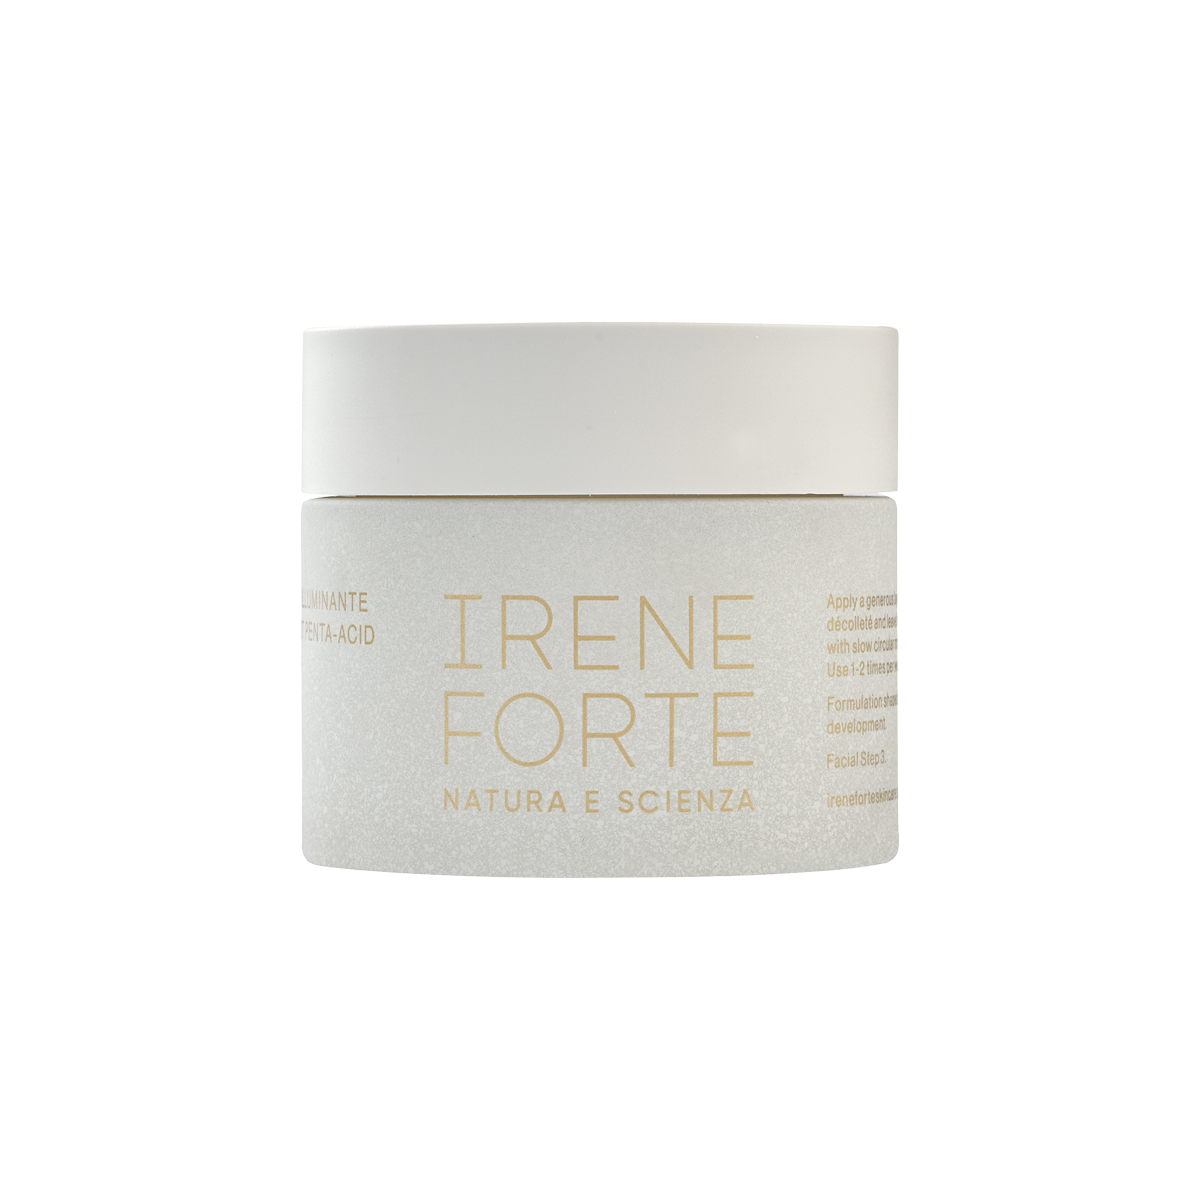 Irene Forte - Apricot Penta-Acid Polish